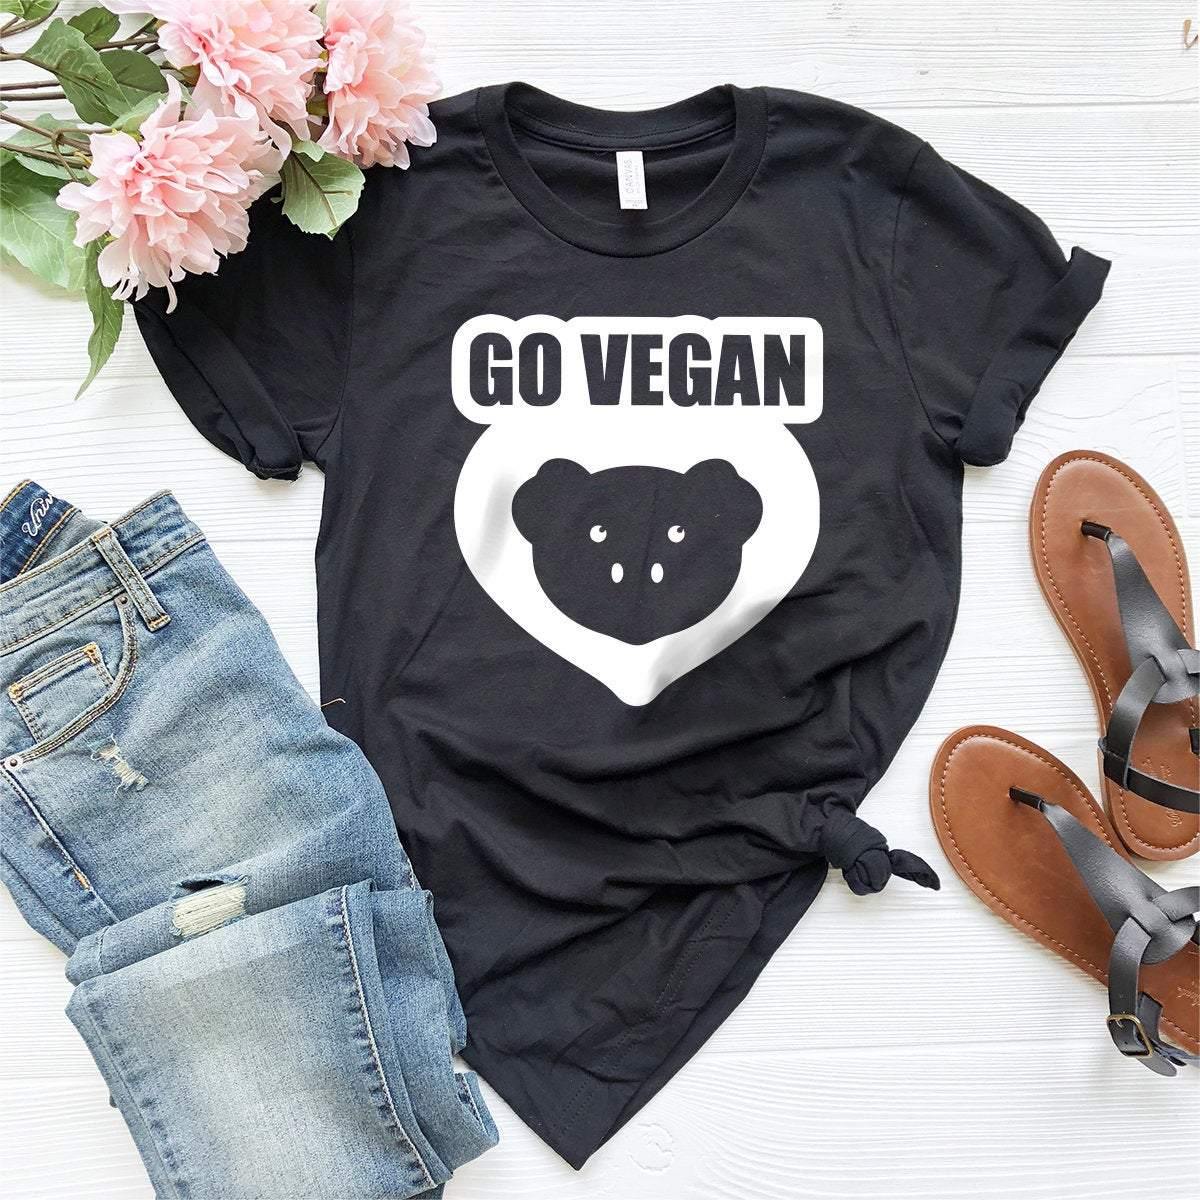 Funny Vegan Shirt, Go Vegan T-Shirt, Animal Rights Tee, Save Animal Shirt, Vegetarian Shirt, Vegan Tee, Animal Activist Shirt, Vegan Gift - Fastdeliverytees.com